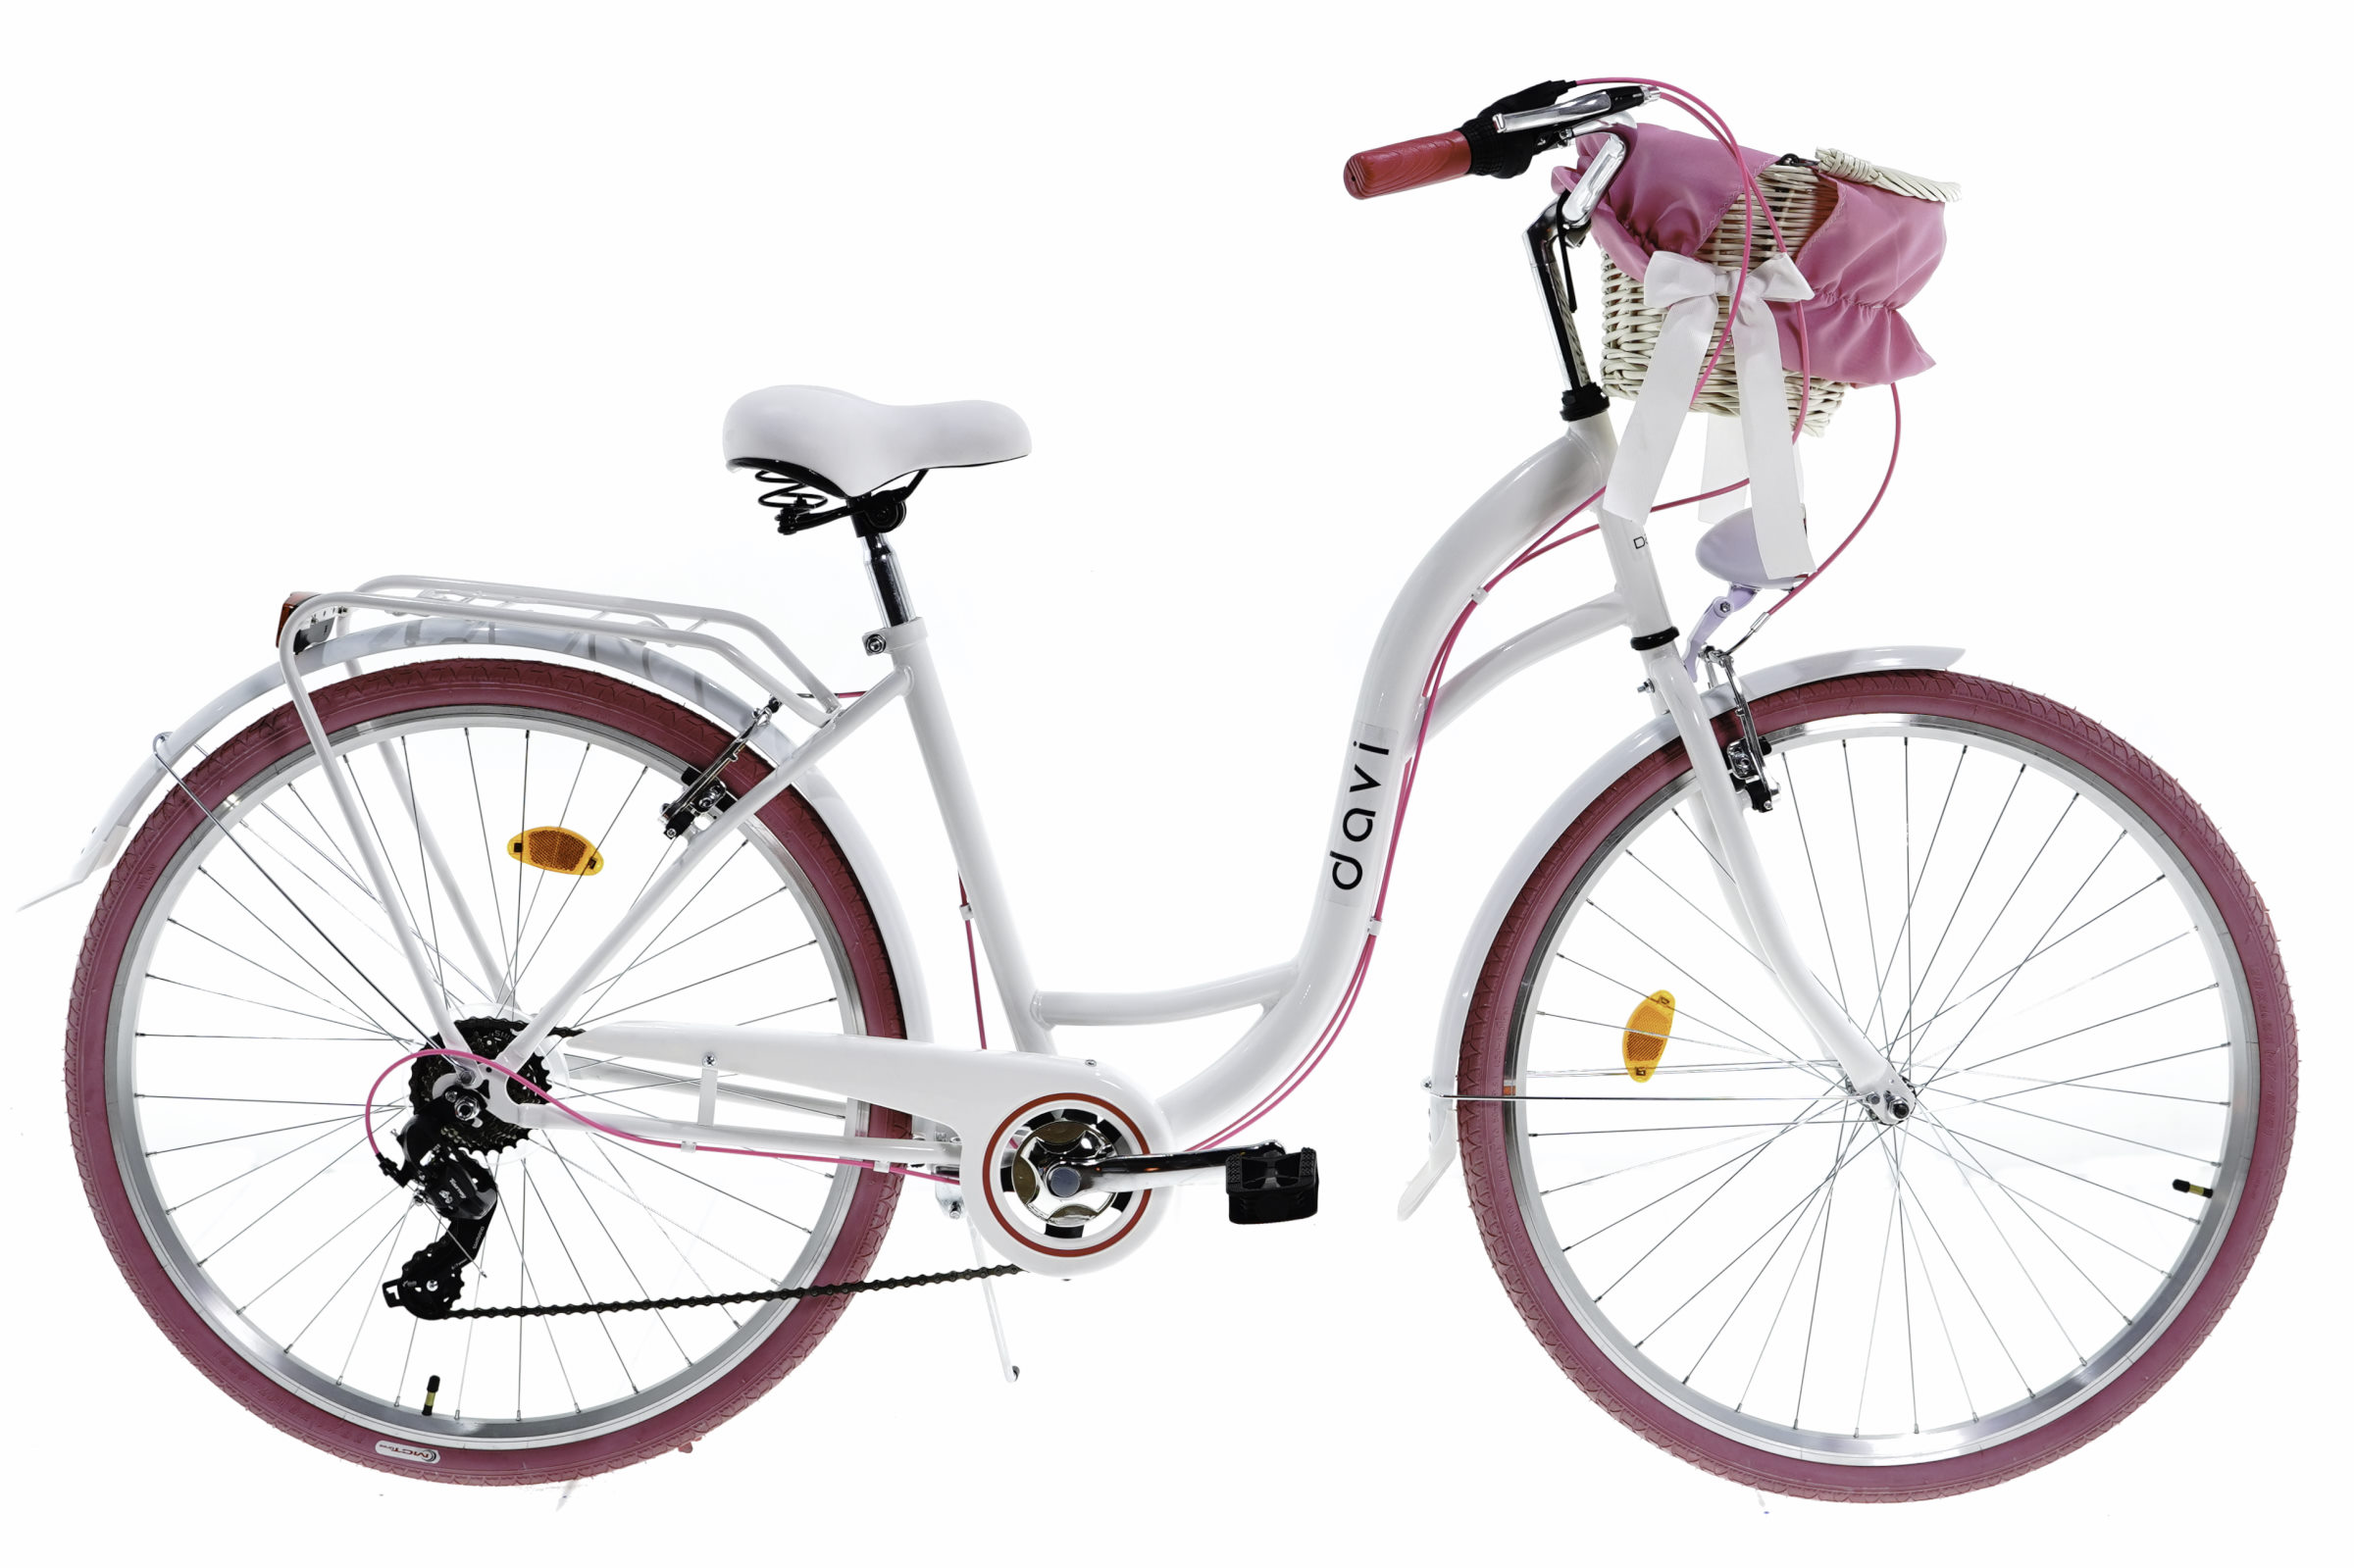 Дамски велосипед Davi Emma, 7-скоростен Shimano,160-185 cm височина, колела 28″, Бял/Розов